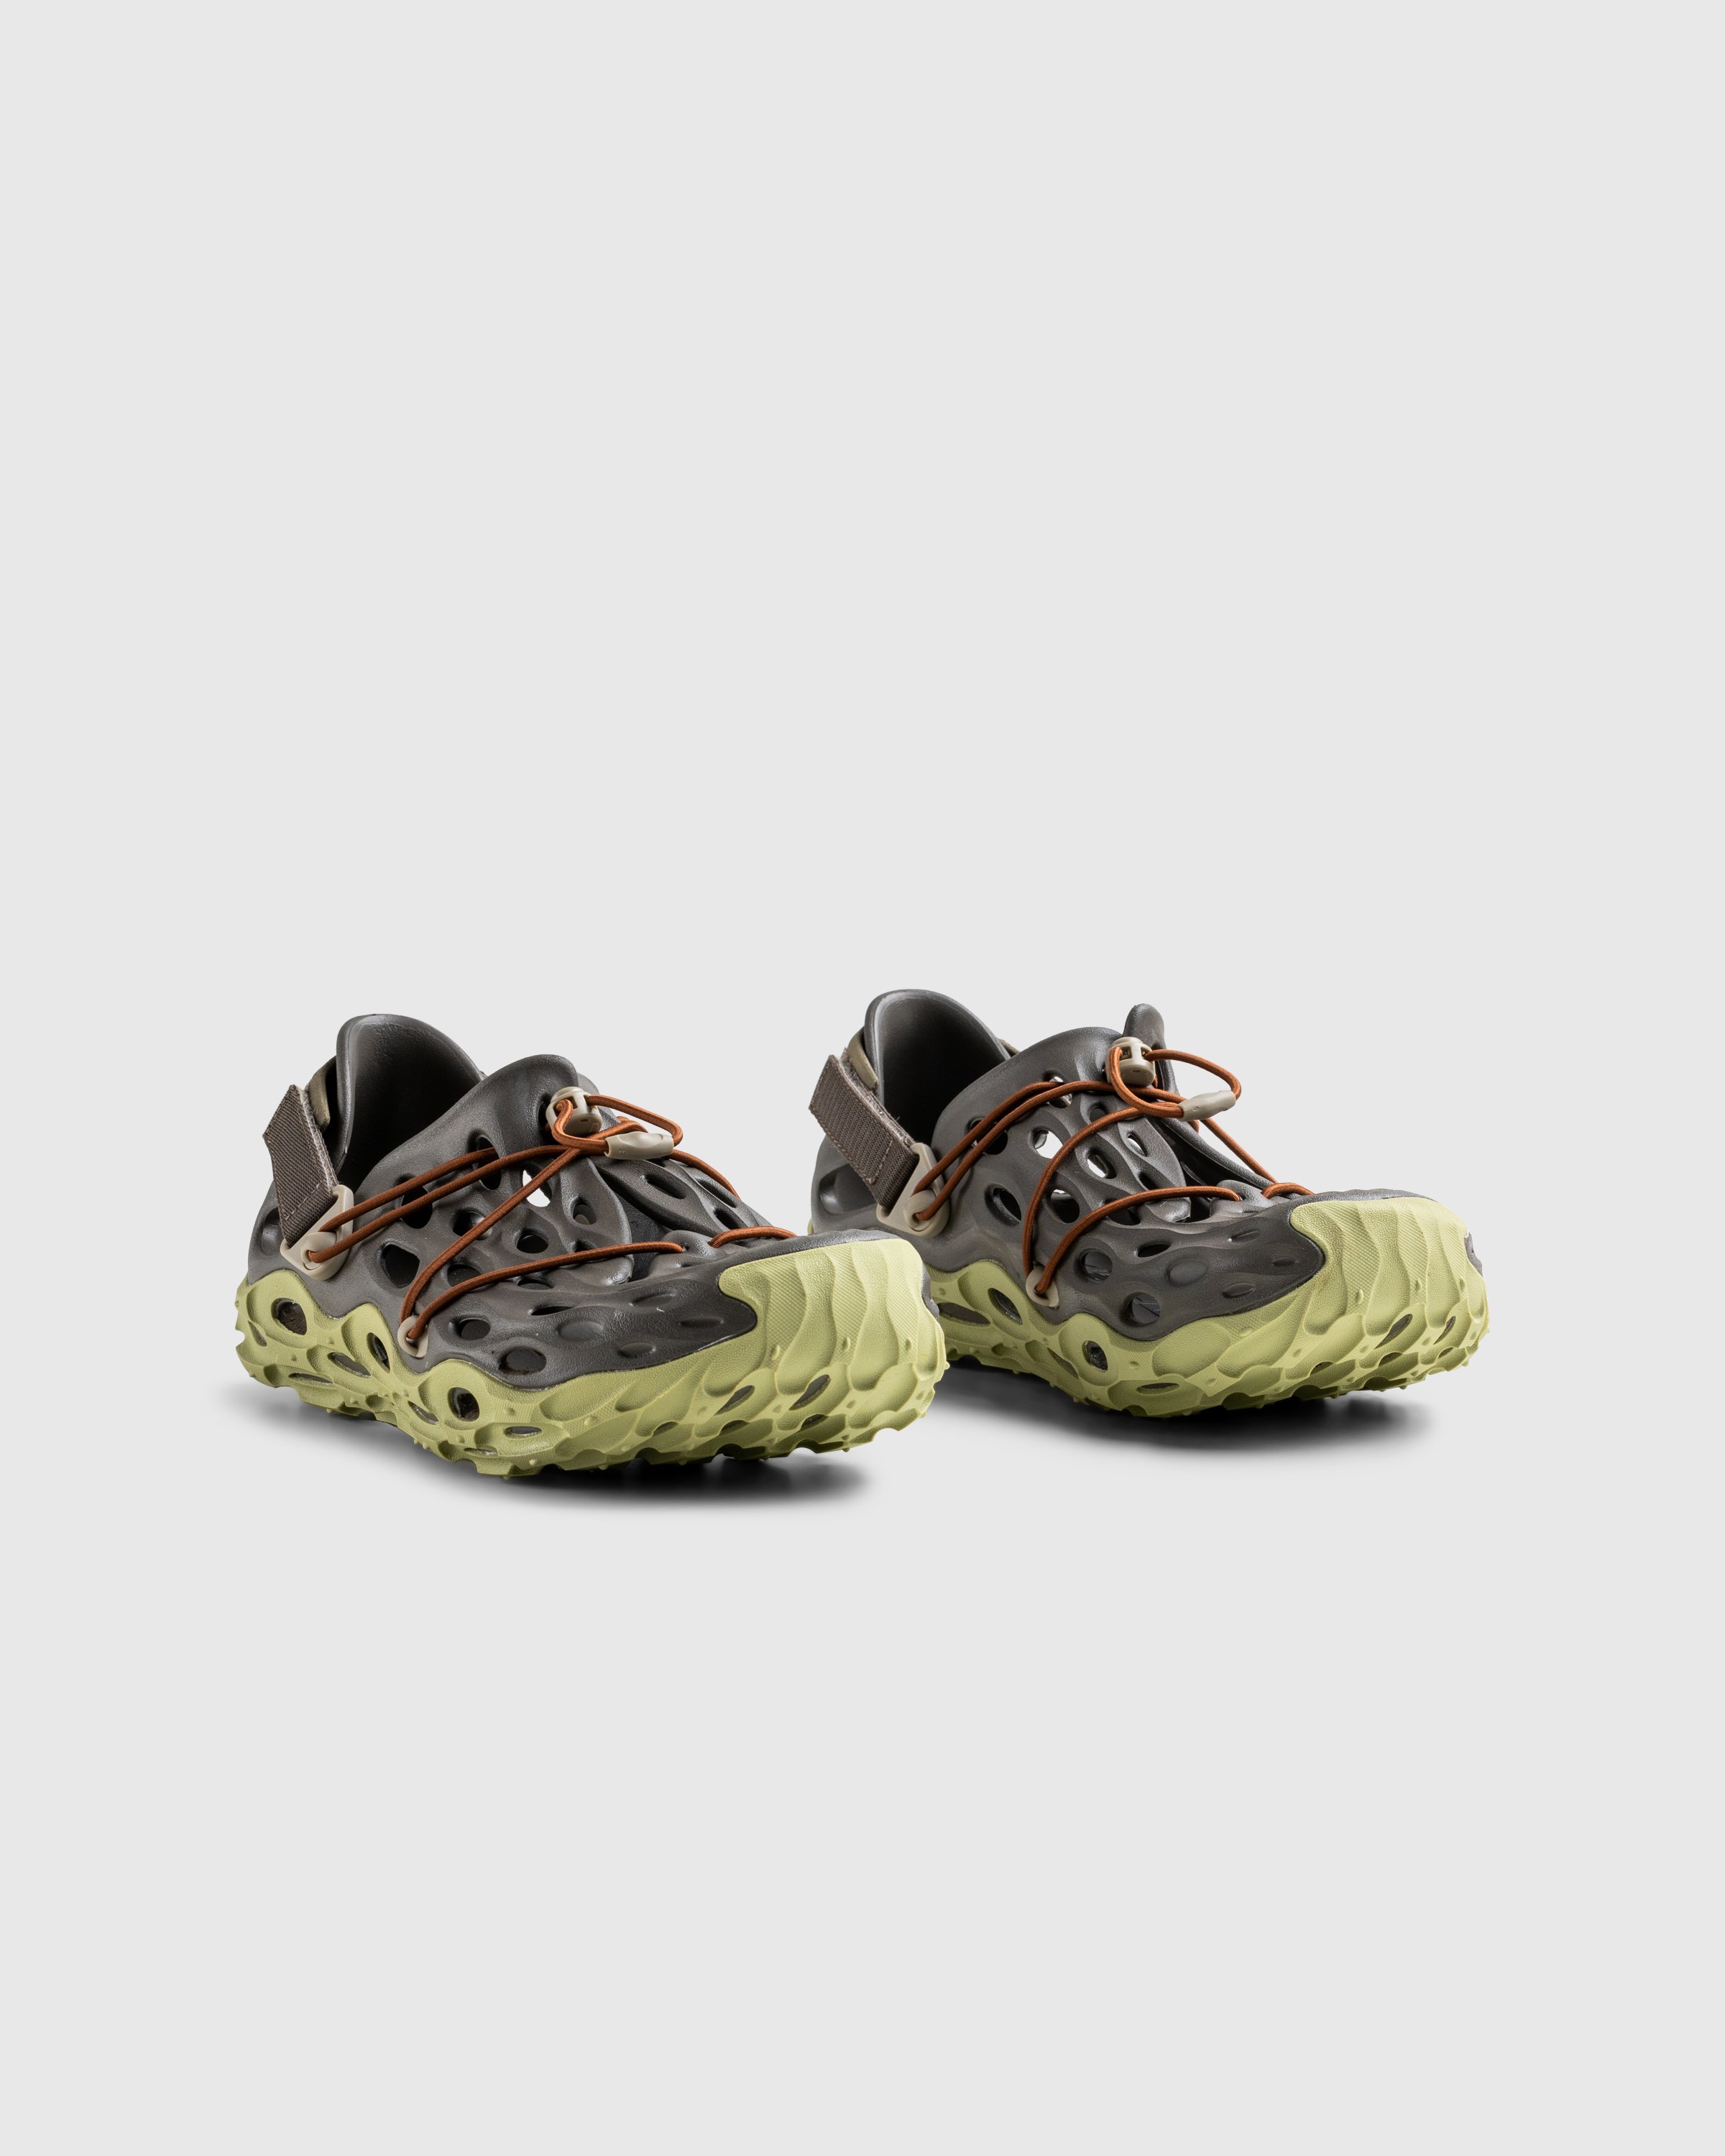 Merrell - HYDRO MOC AT CAGE SE/BOULDER - Footwear - Green - Image 3